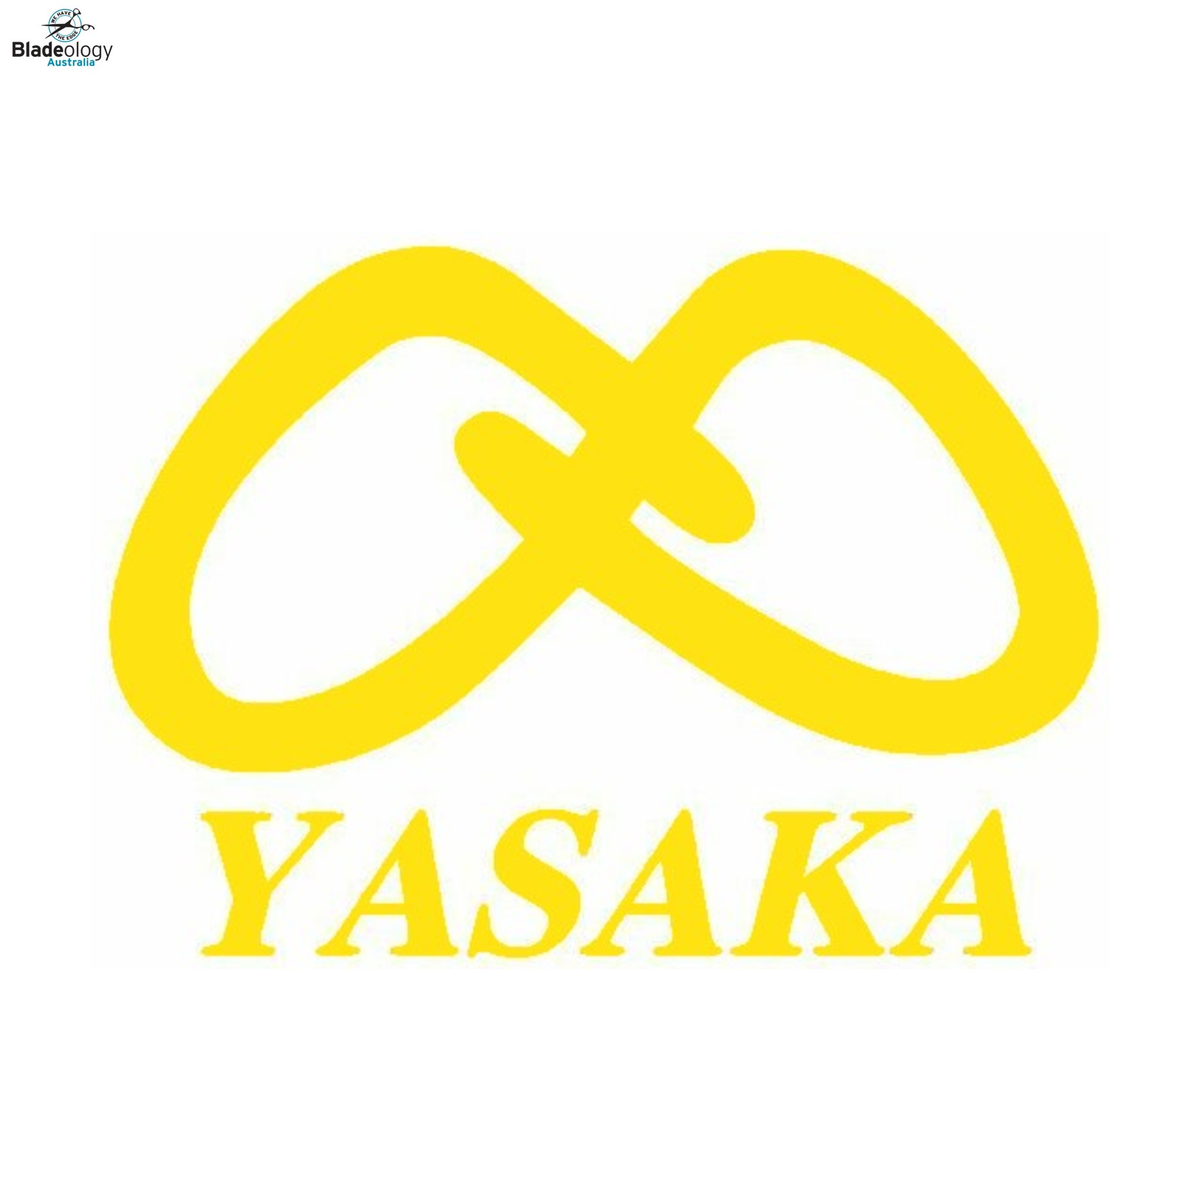 Yasaka Japanese Scissors logo